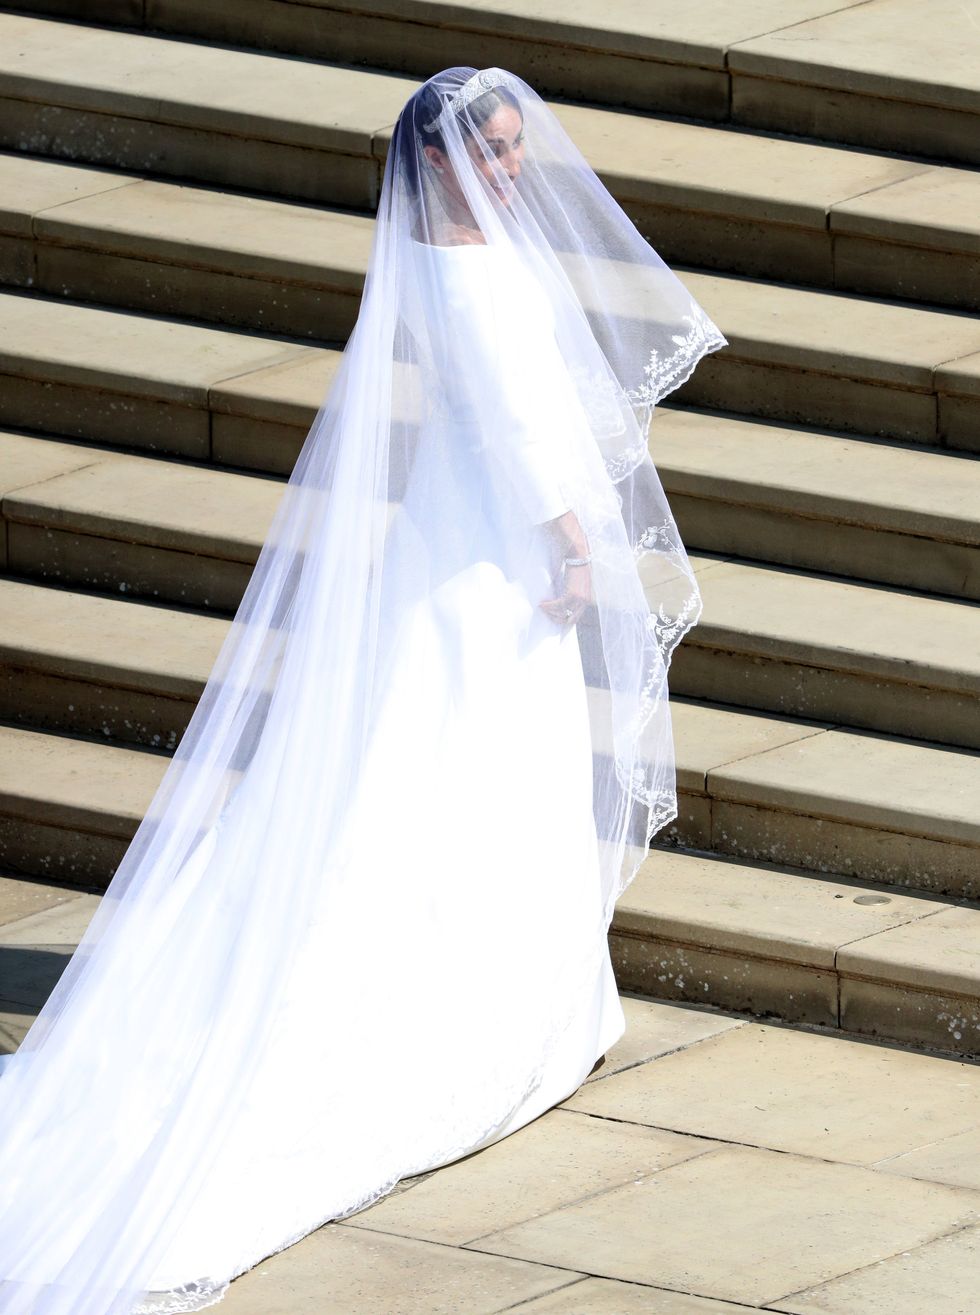 Bridal veil, Veil, Textile, Photograph, Bridal clothing, Wedding dress, Bridal accessory, Bride, Stairs, Gown, 